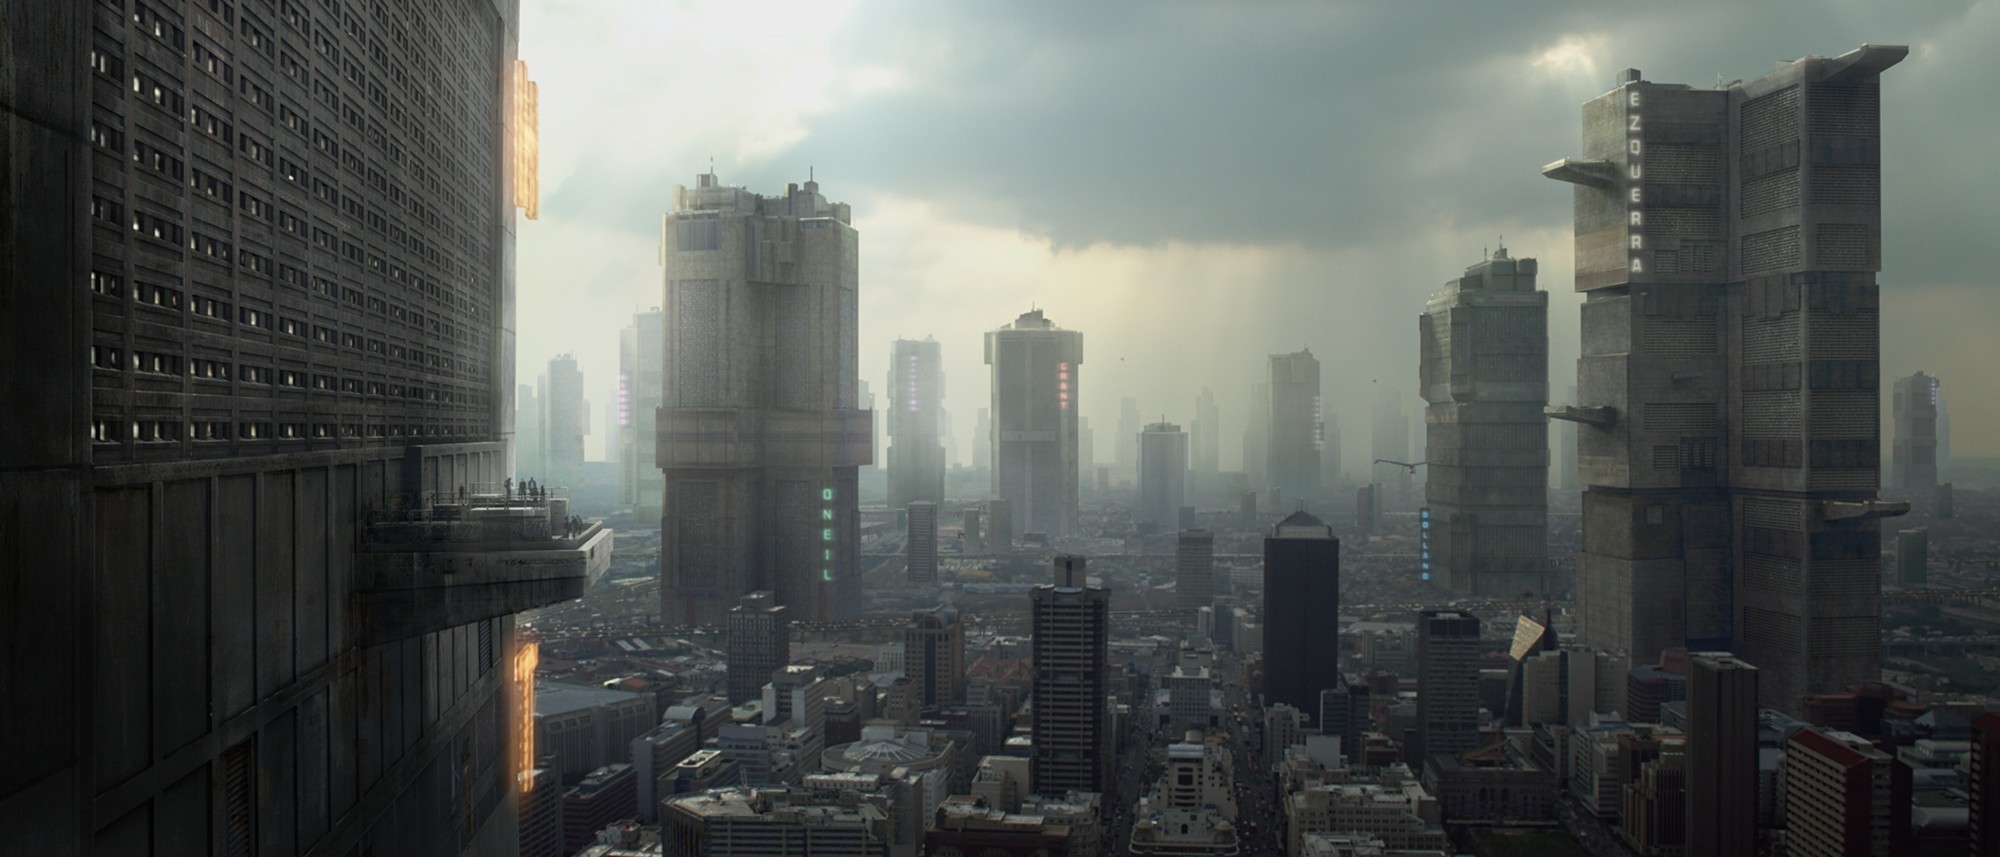 A scene from Lionsgate Films' Dredd (2012)